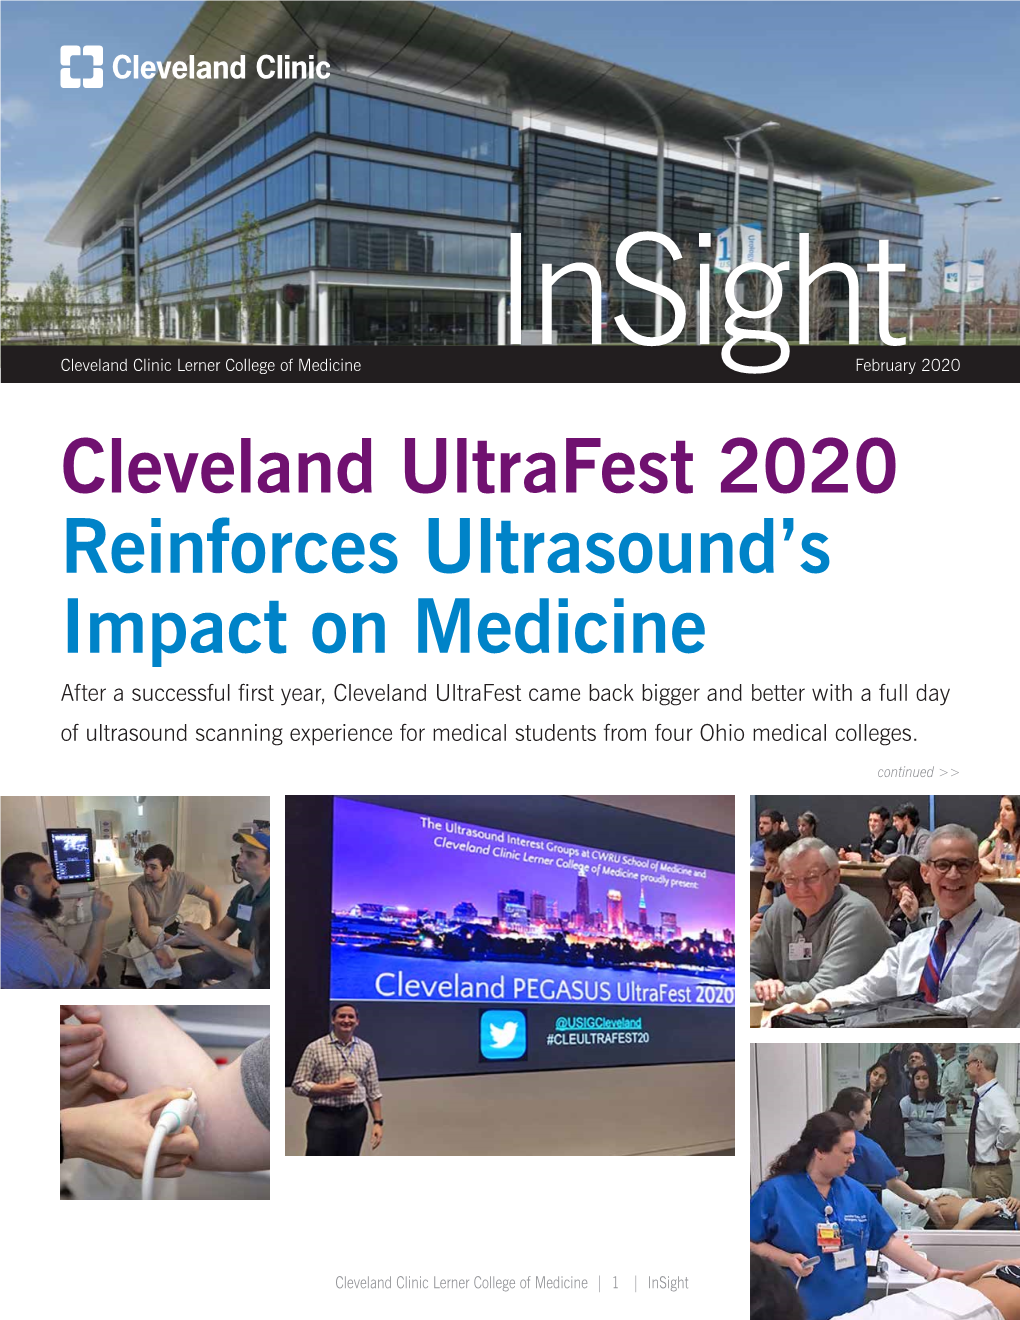 Cleveland Ultrafest 2020 Reinforces Ultrasound's Impact on Medicine